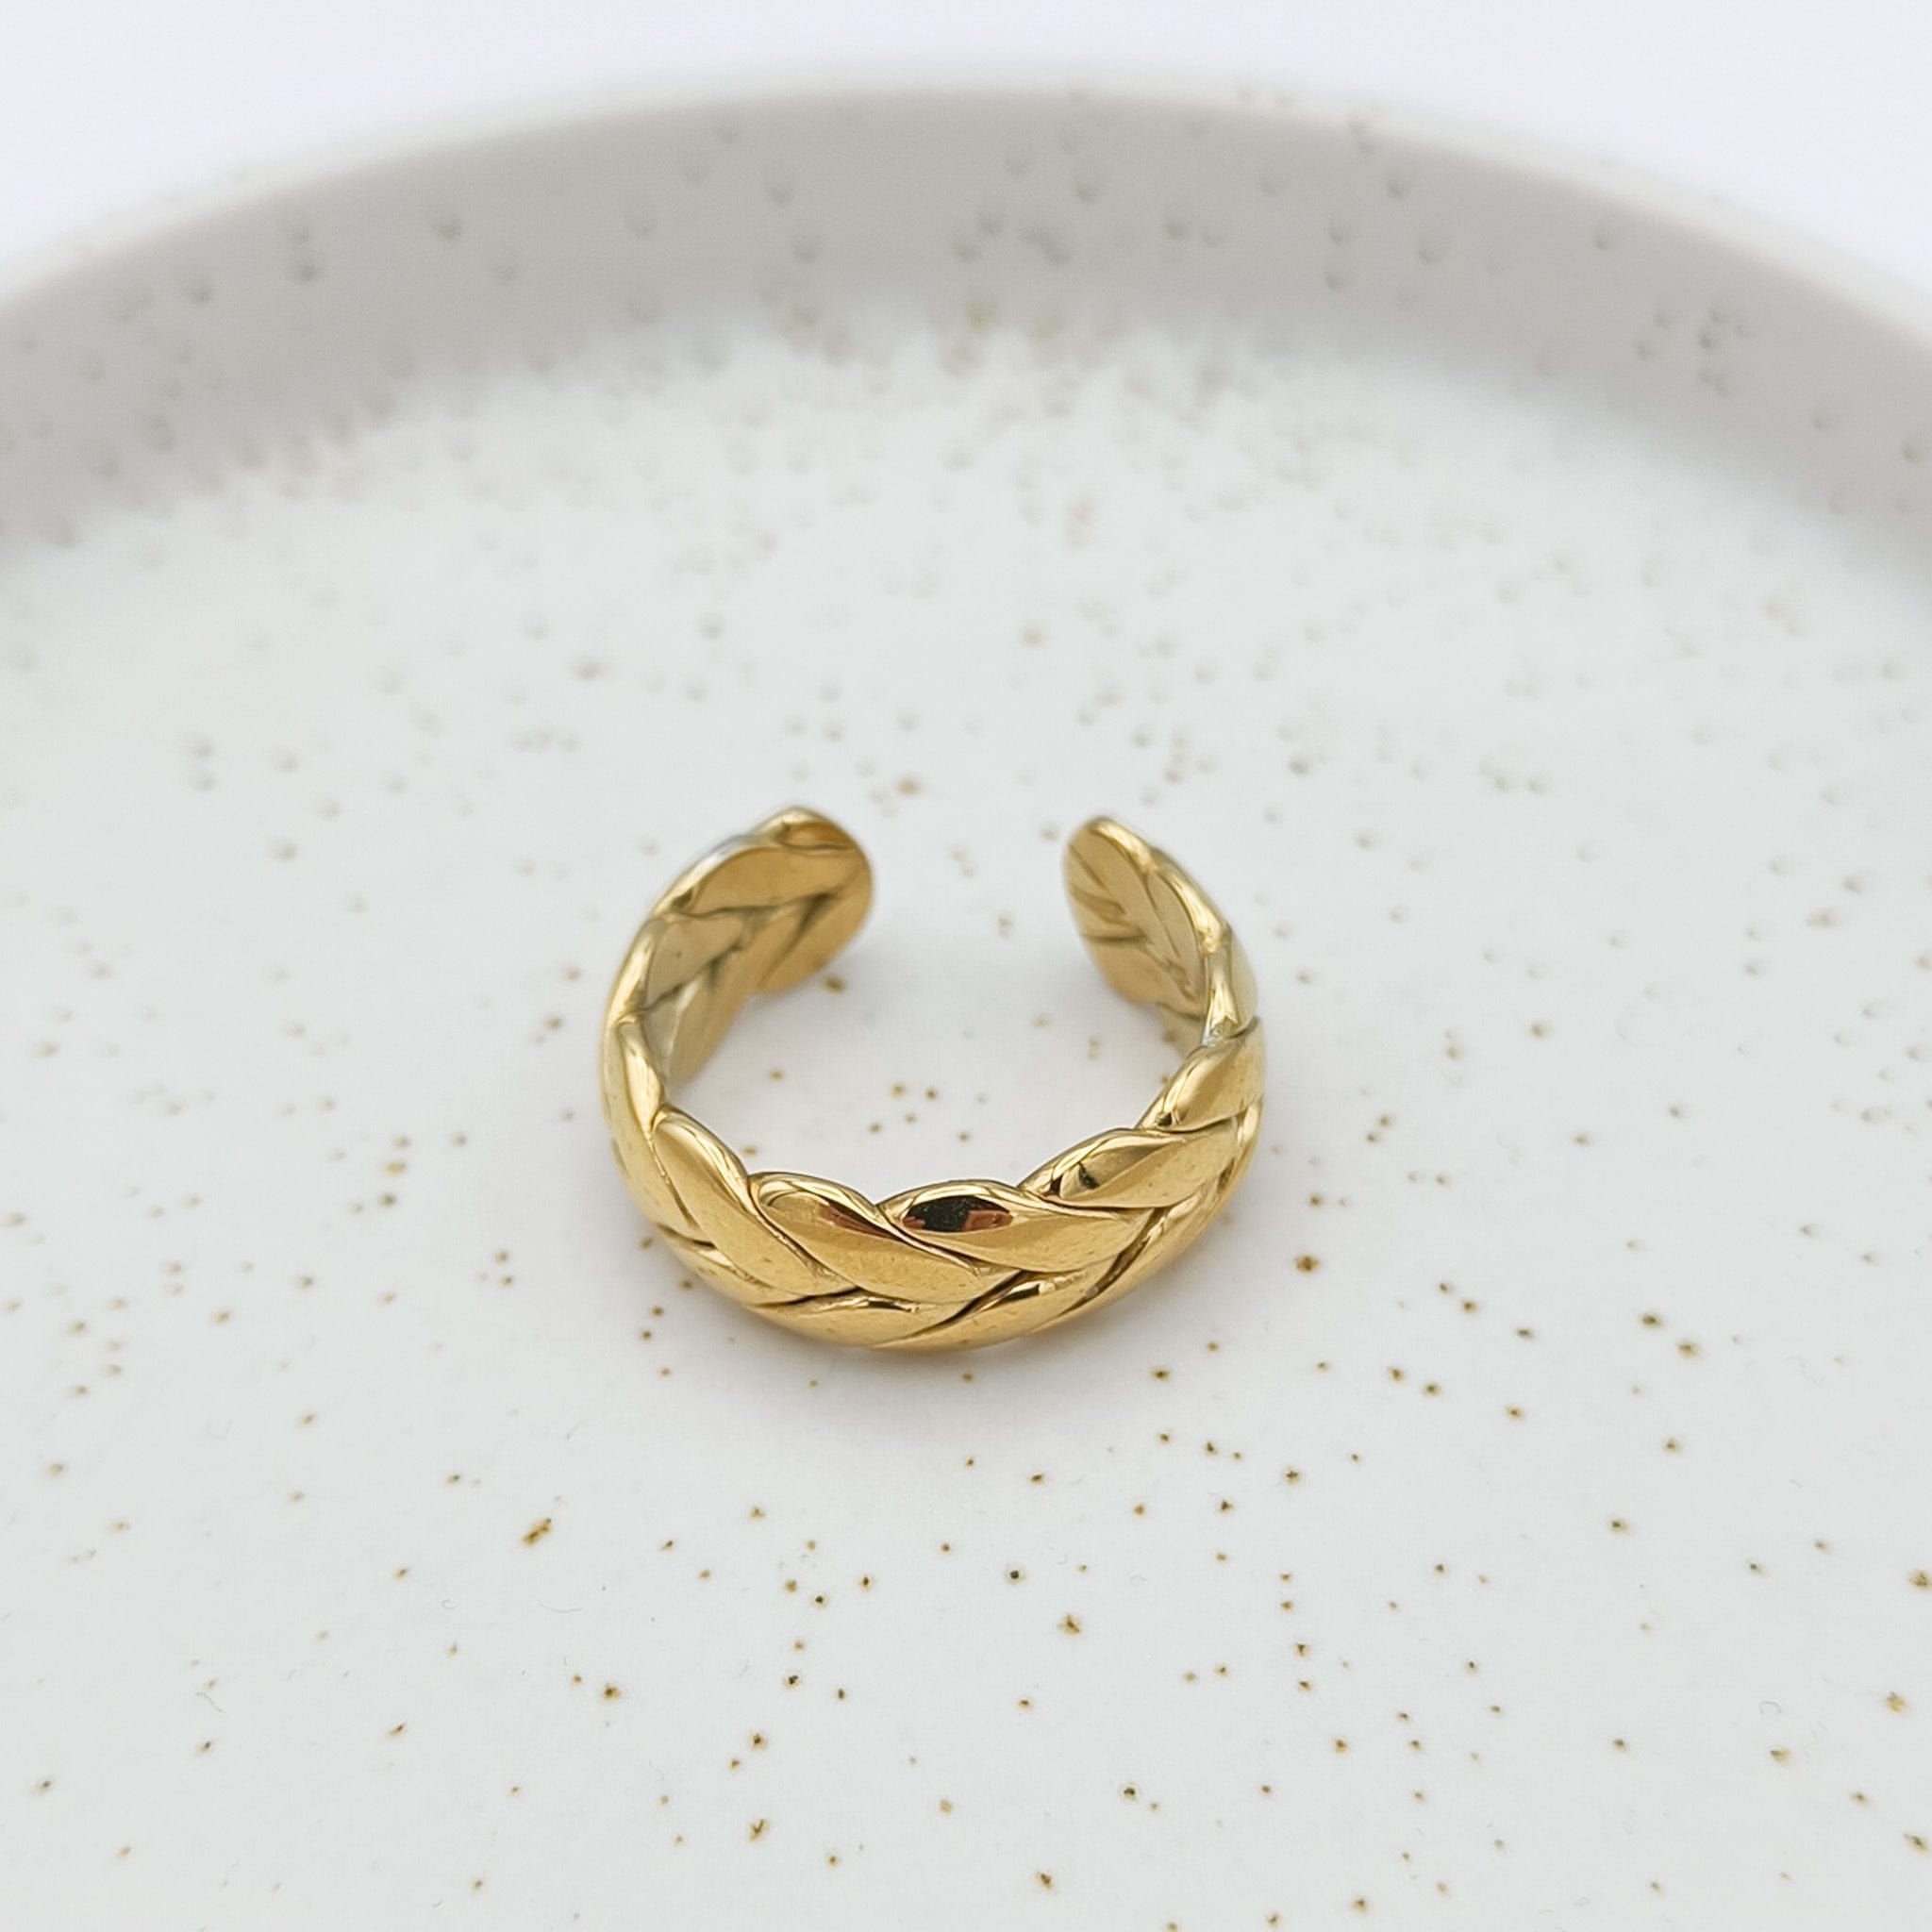 ROOI Ring R14A Juwelen Sieraden Leuven